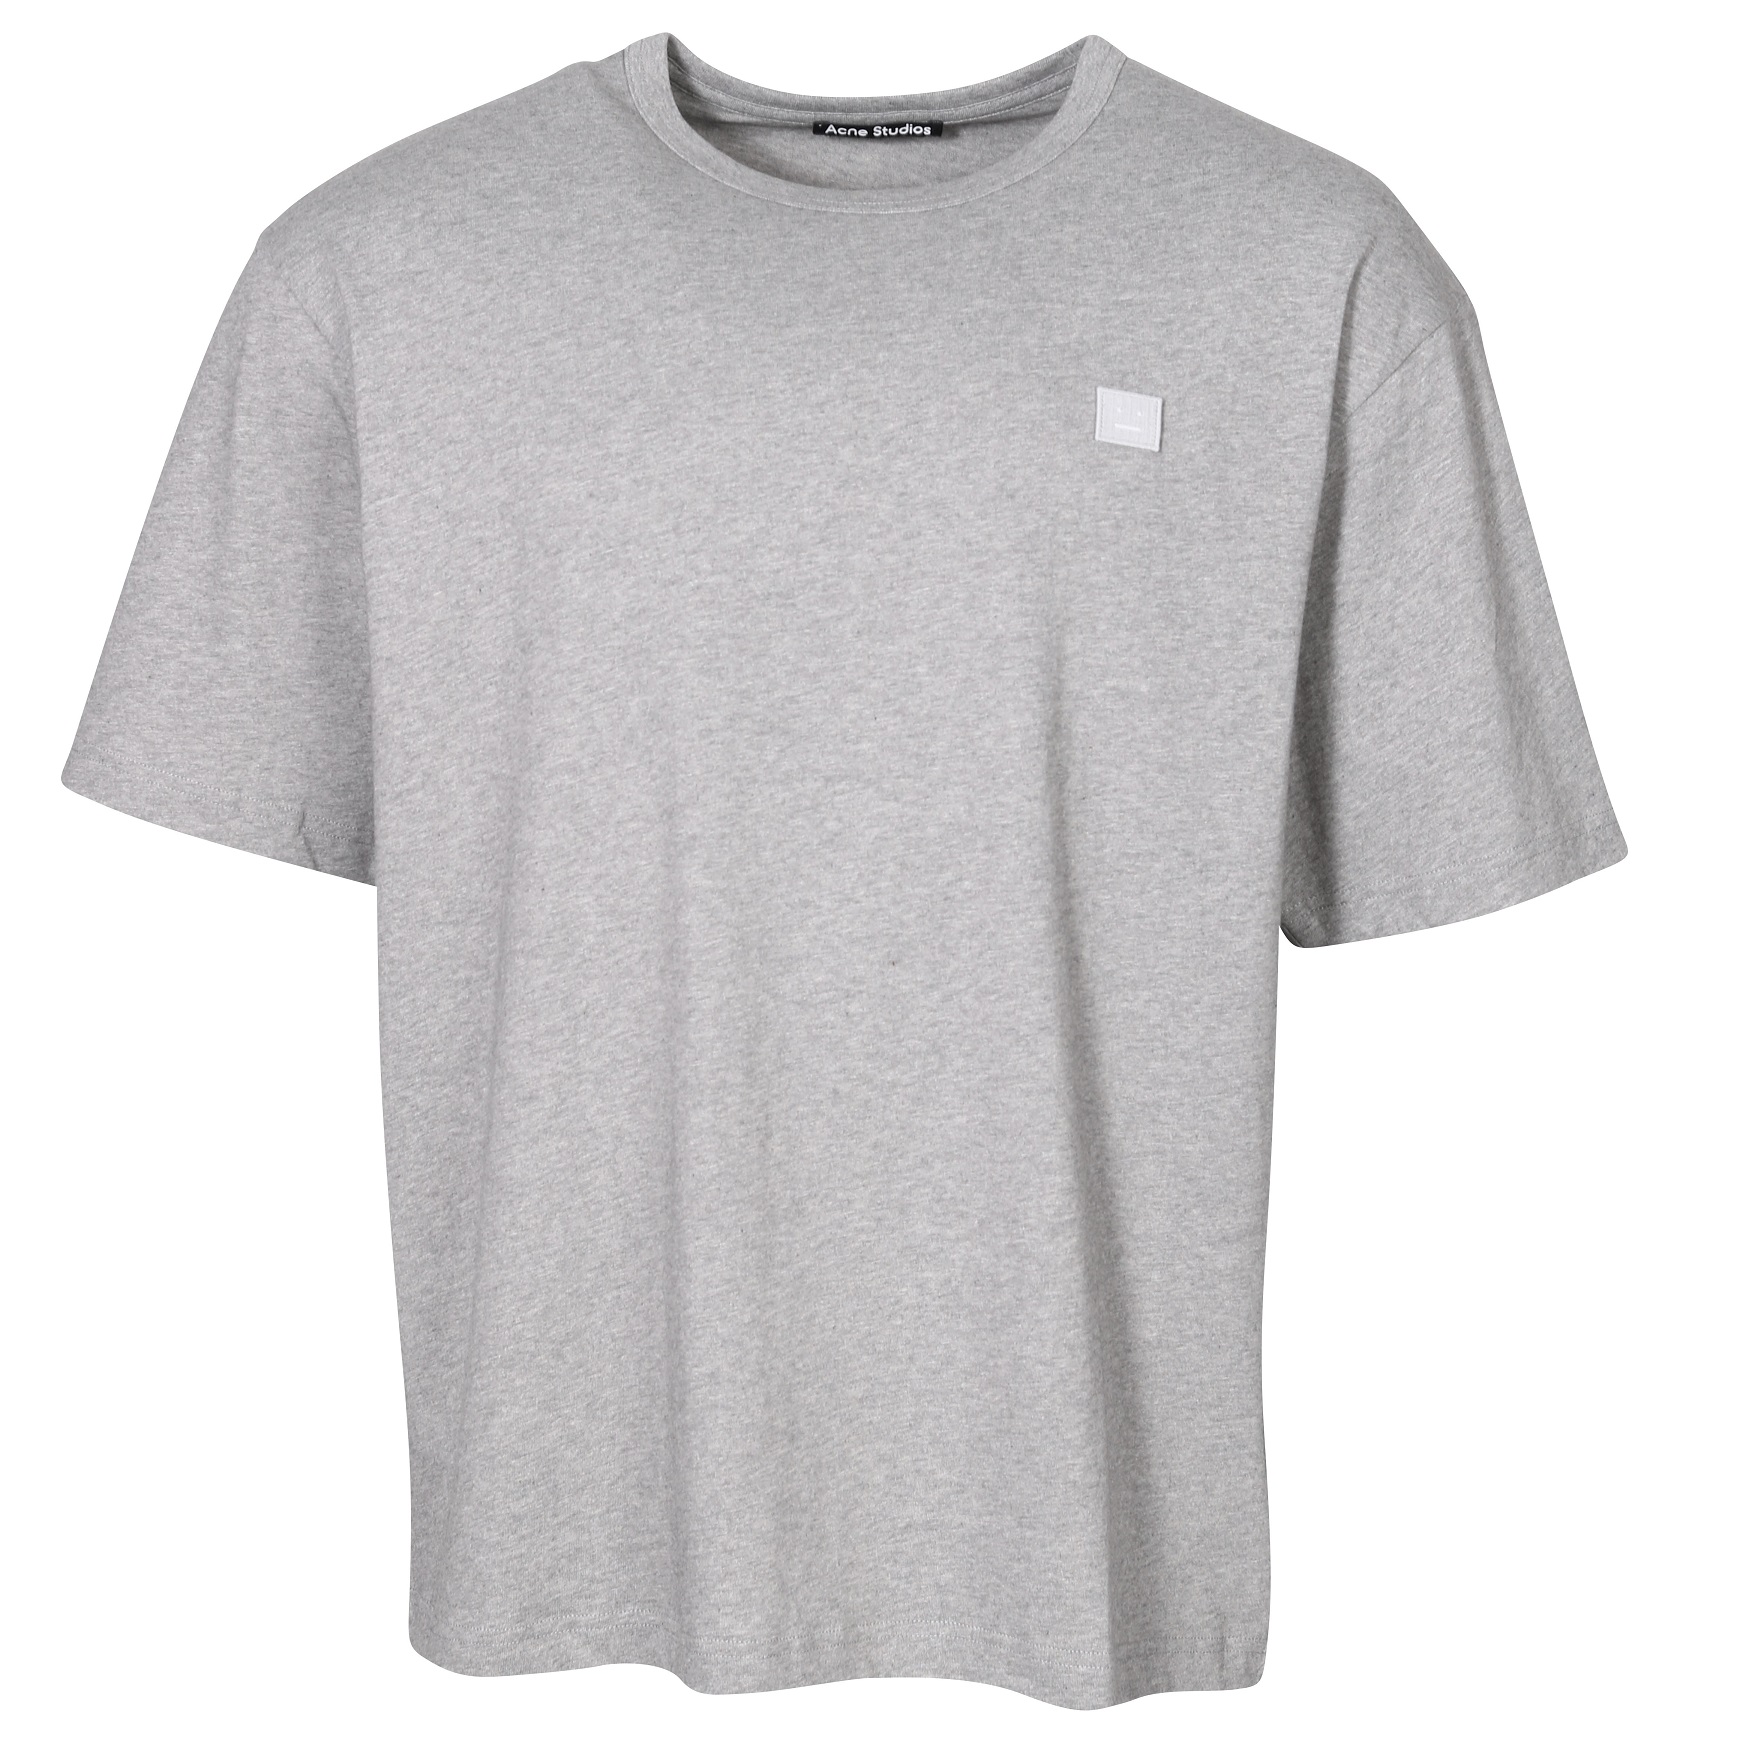 ACNE STUDIOS Unisex Oversize Face T-Shirt in Light Grey Melange L